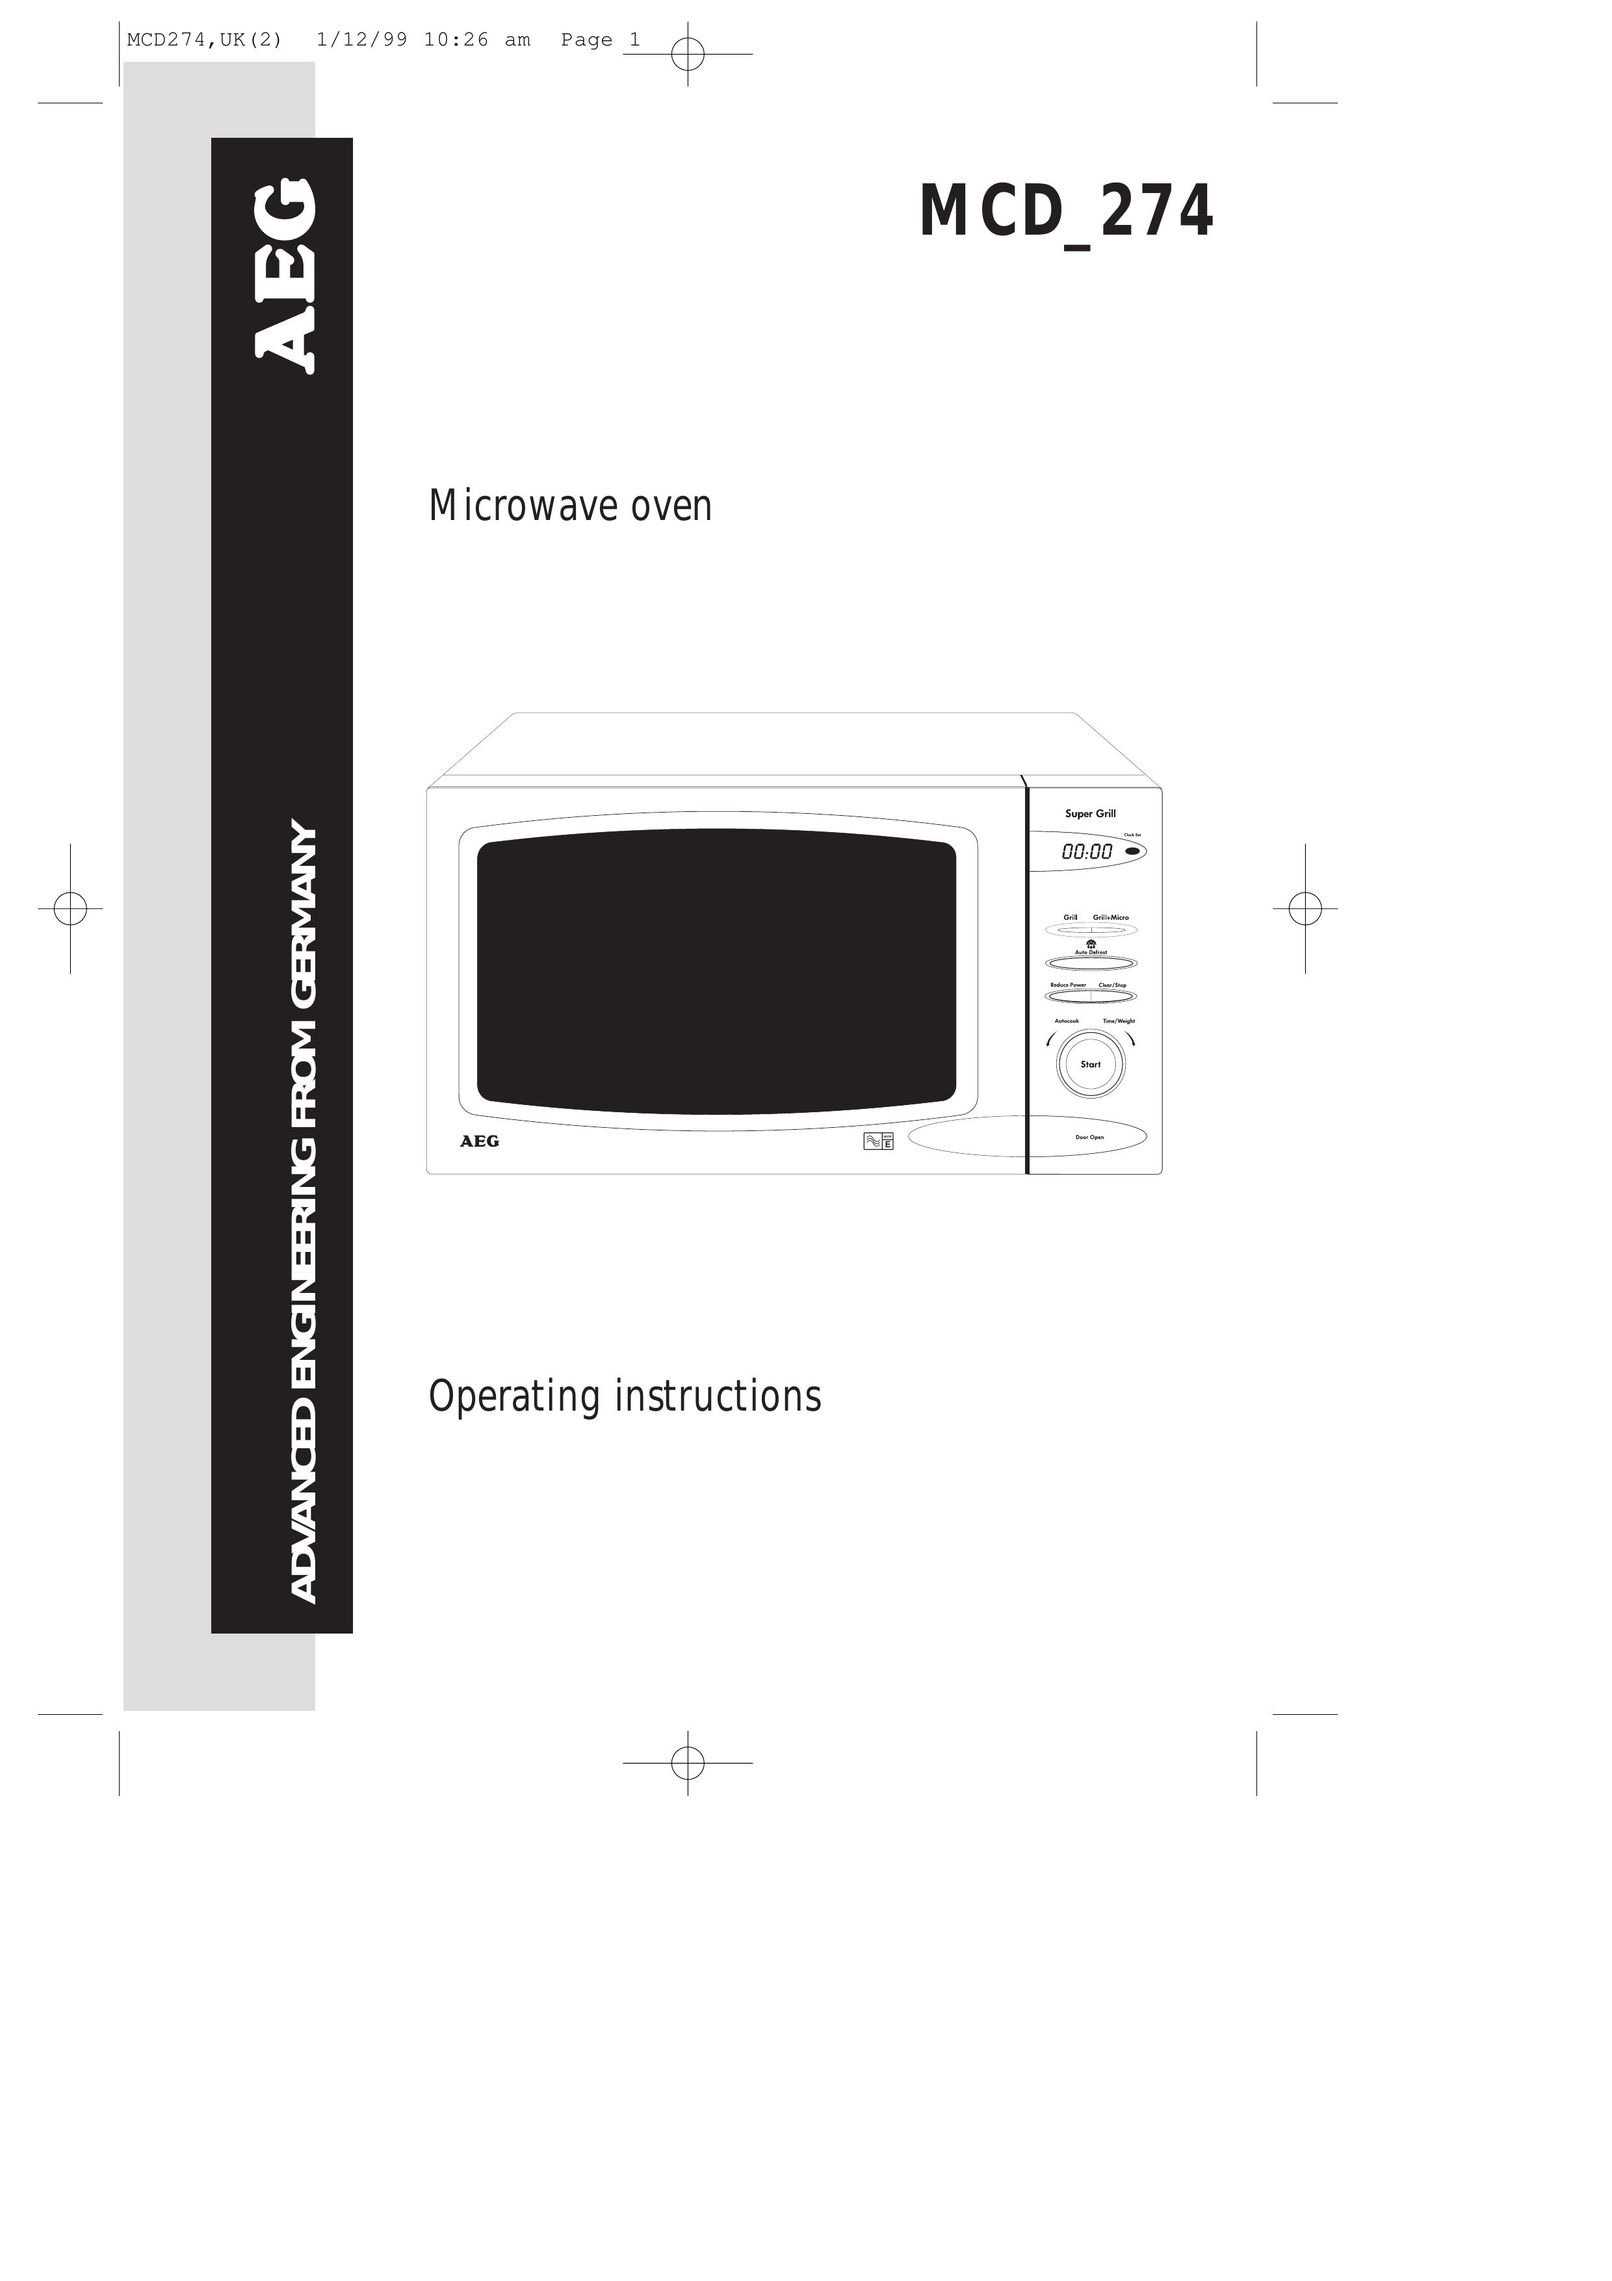 AEG MCD_274 Microwave Oven User Manual